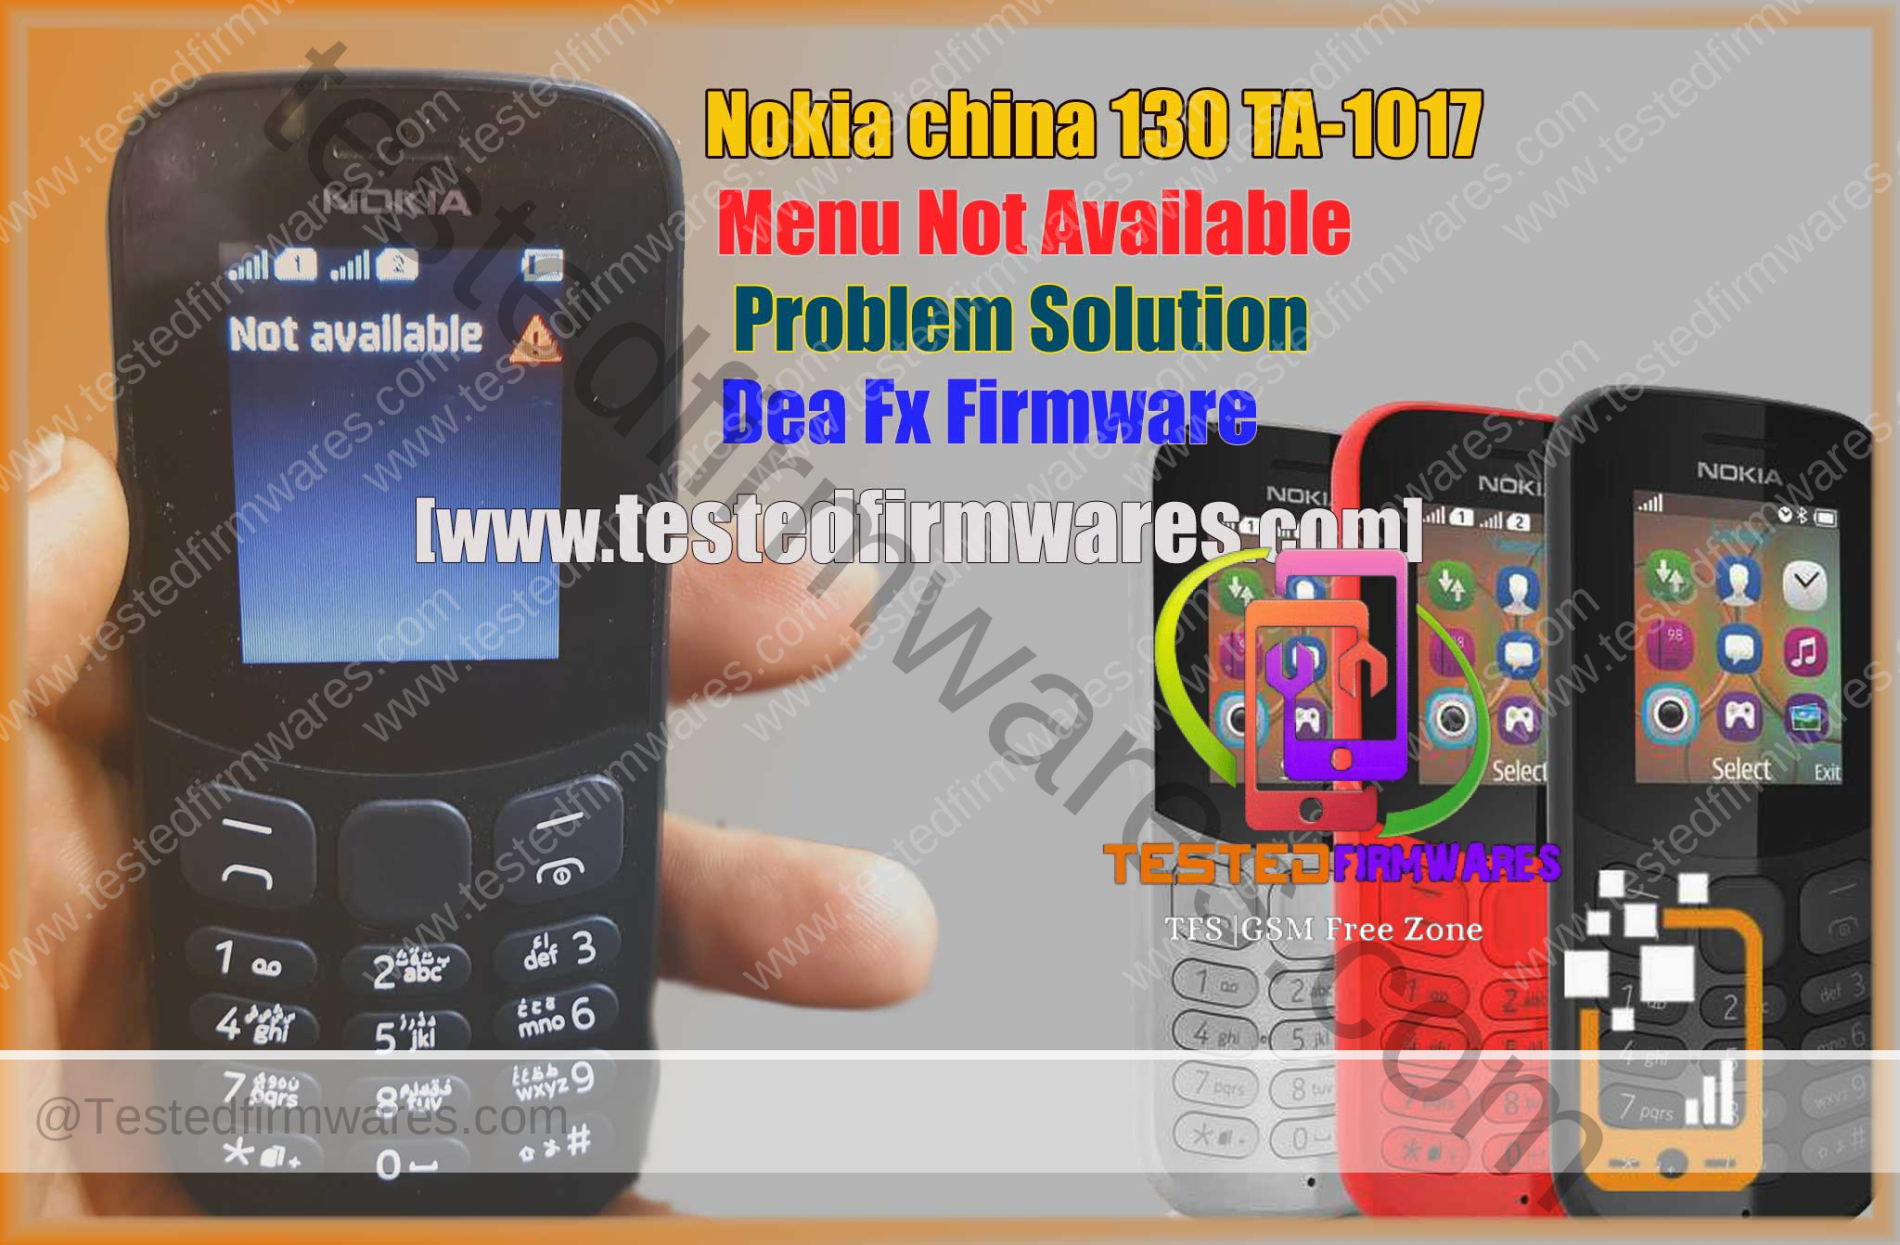 Nokia china 130 TA-1017 Menu Not Available Problem Solution Dea Fx Firmware